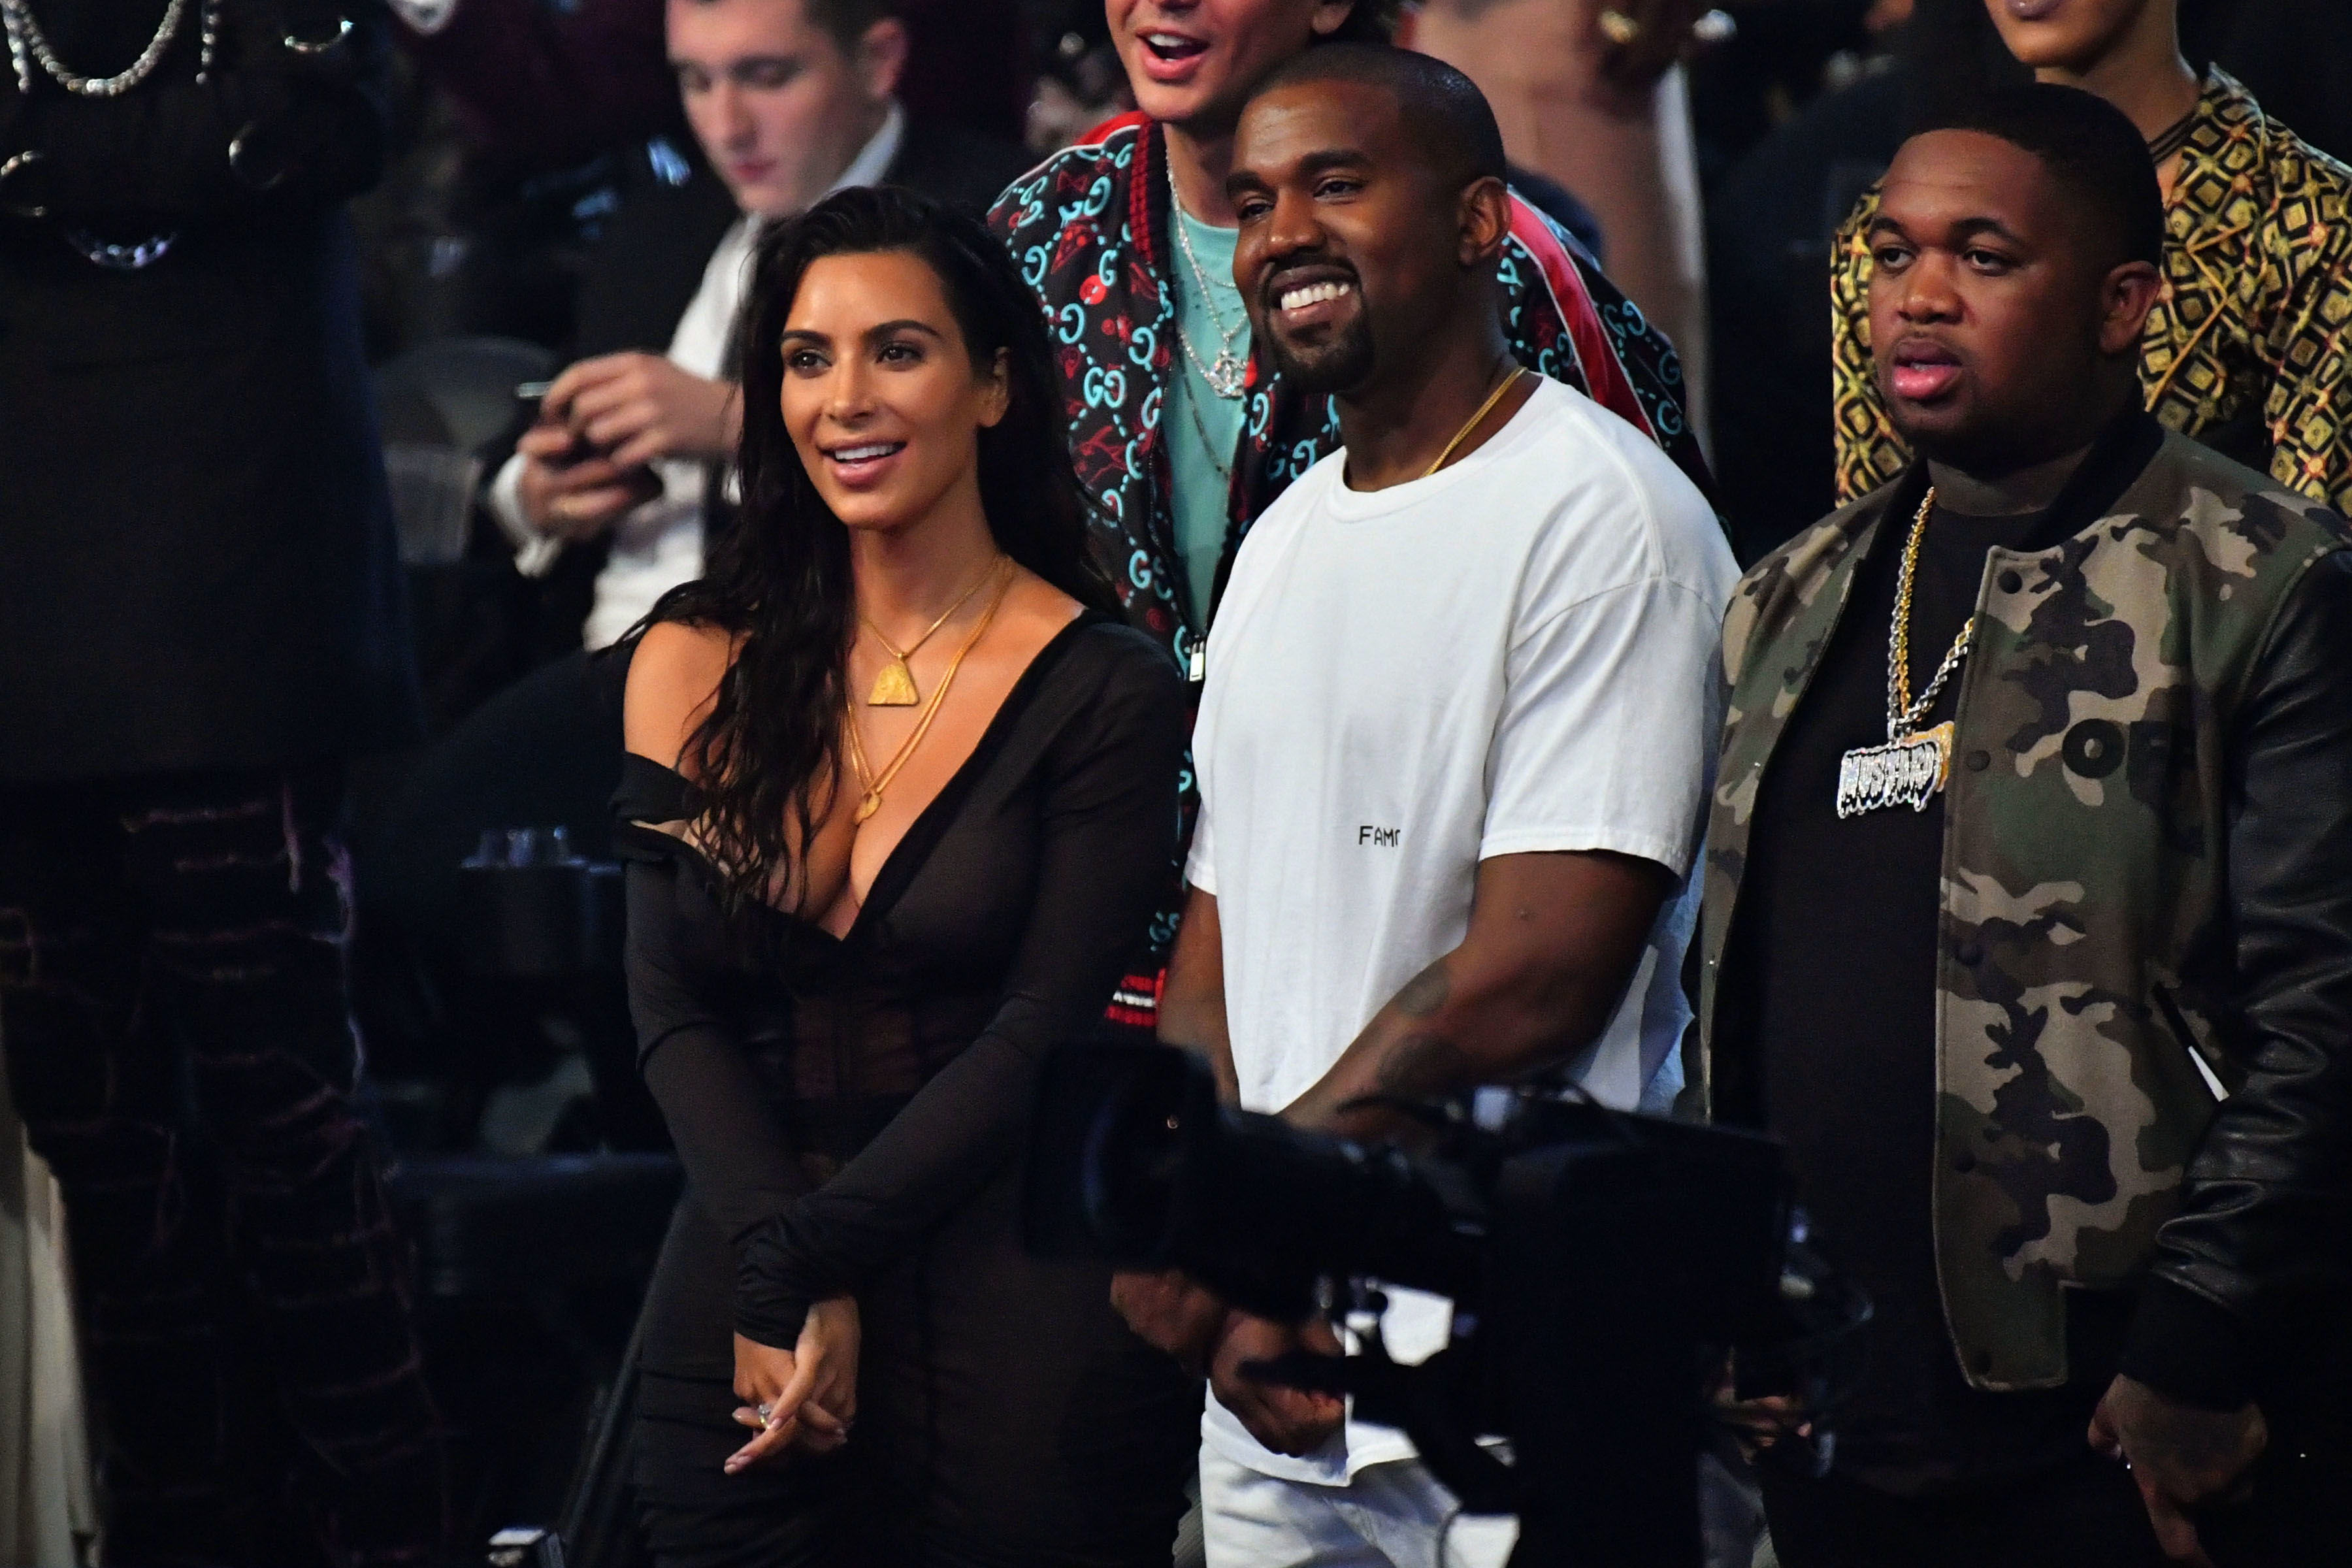 Kim Kardashian and Kanye West at an event